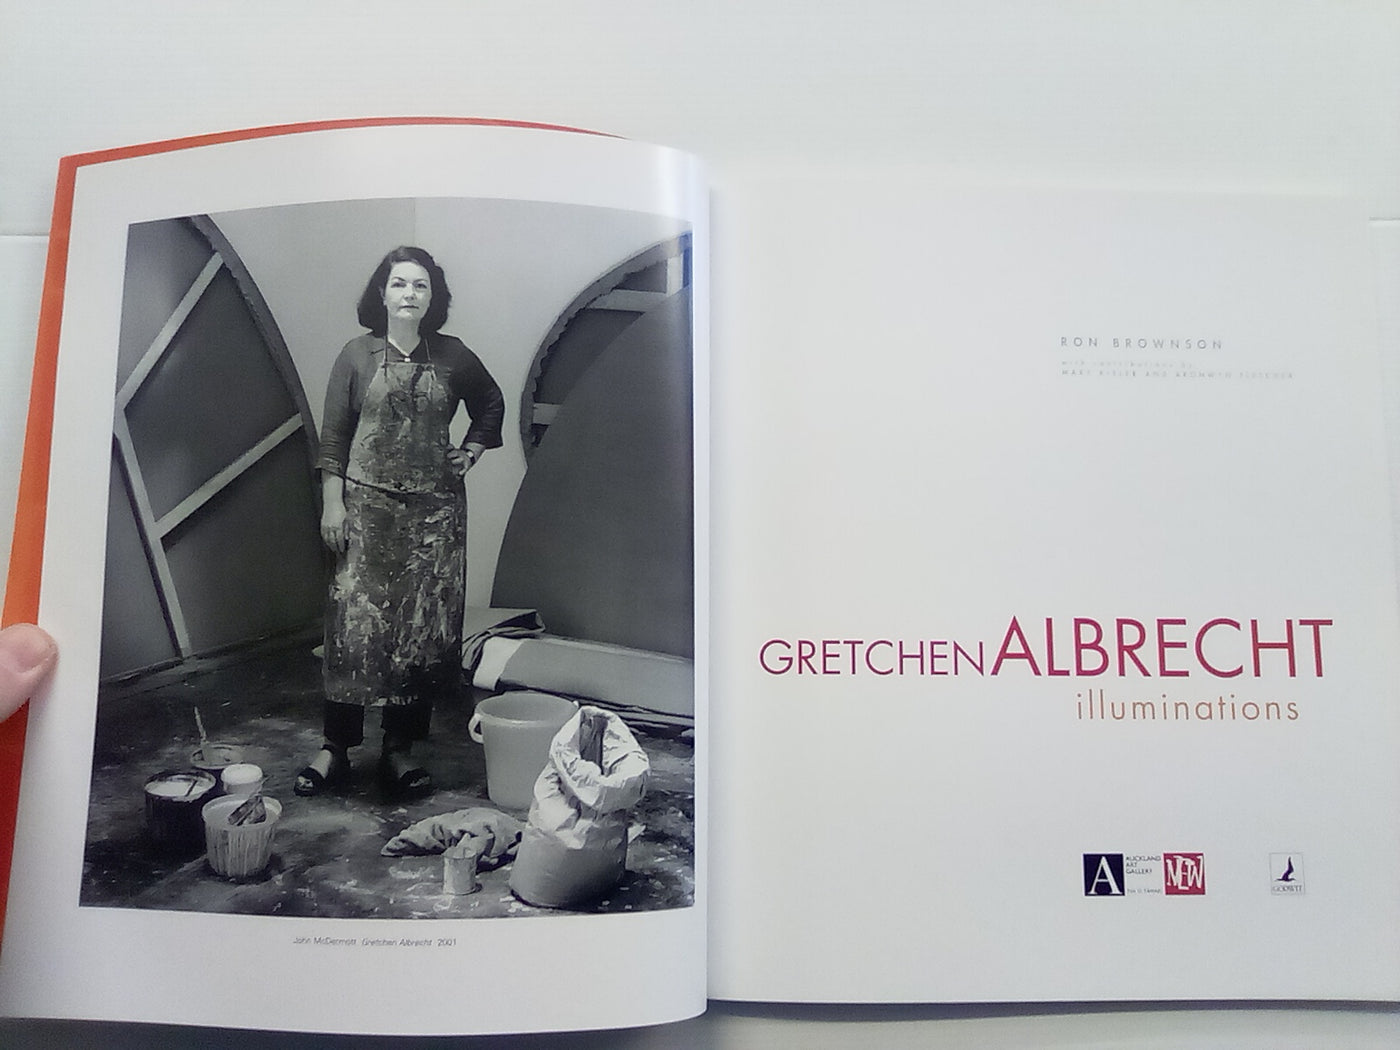 Gretchen Albrecht - Illuminations (2002)